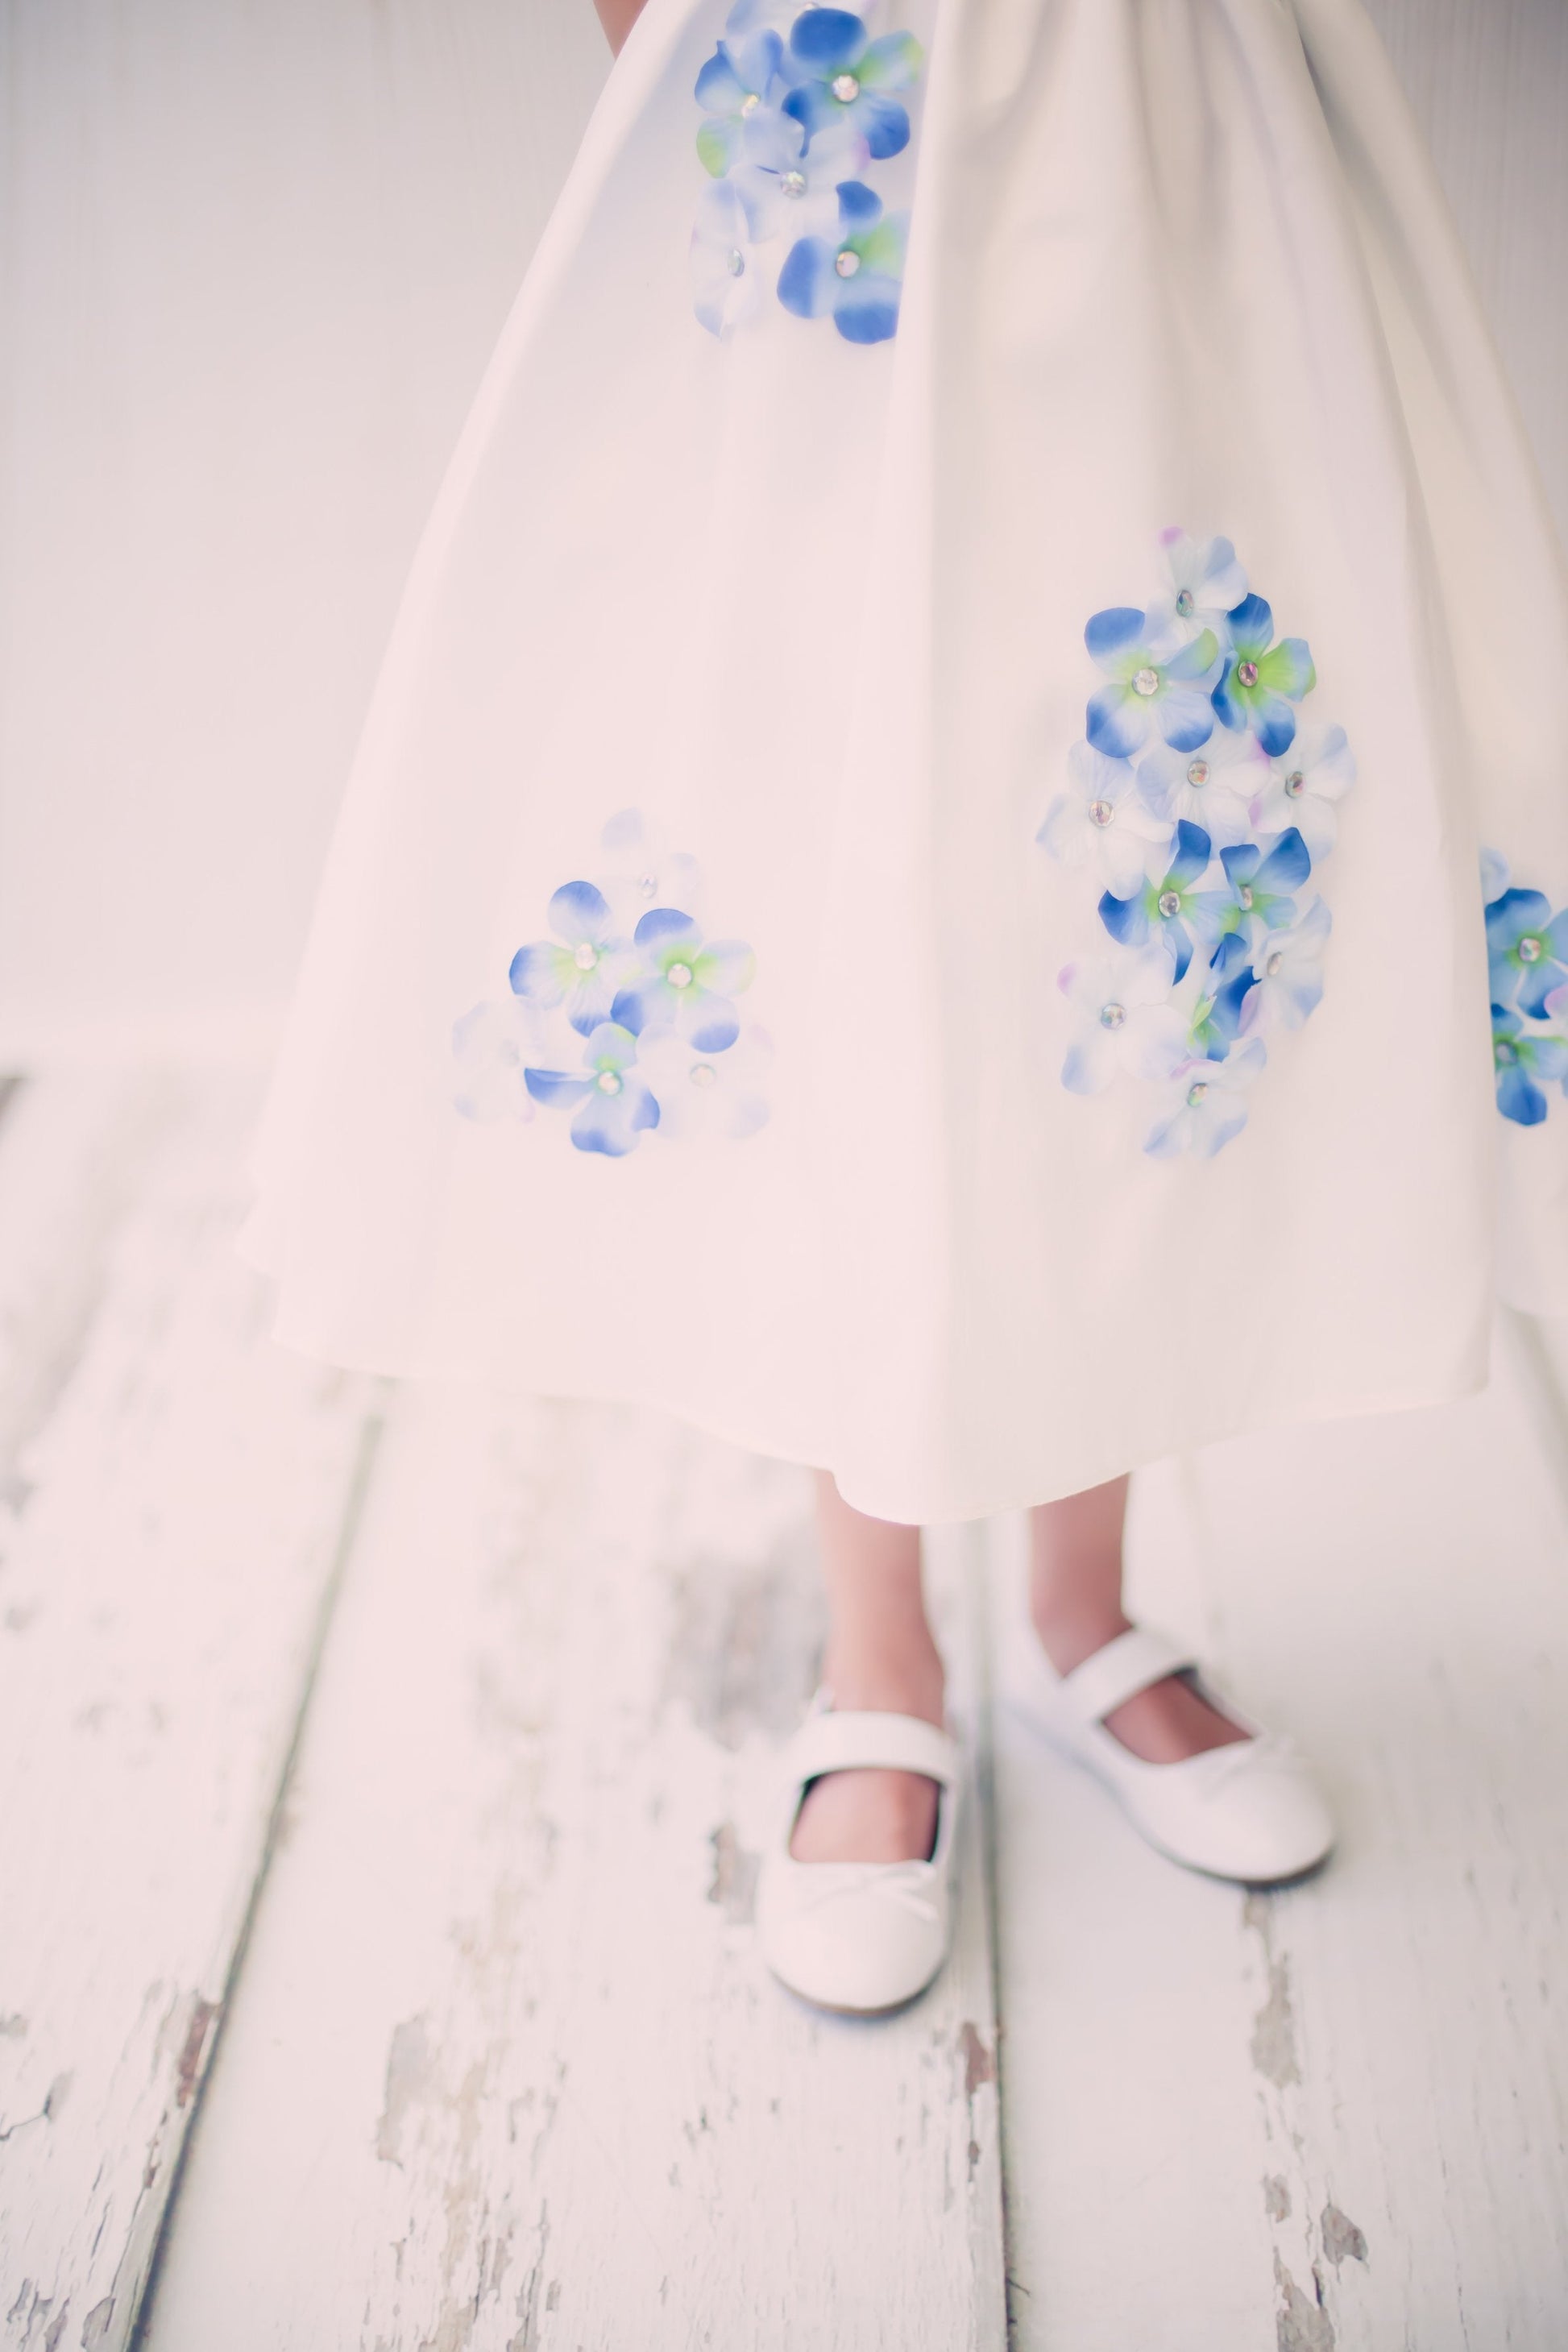 Dress - Shantung Dress Decorated With Flower Petals